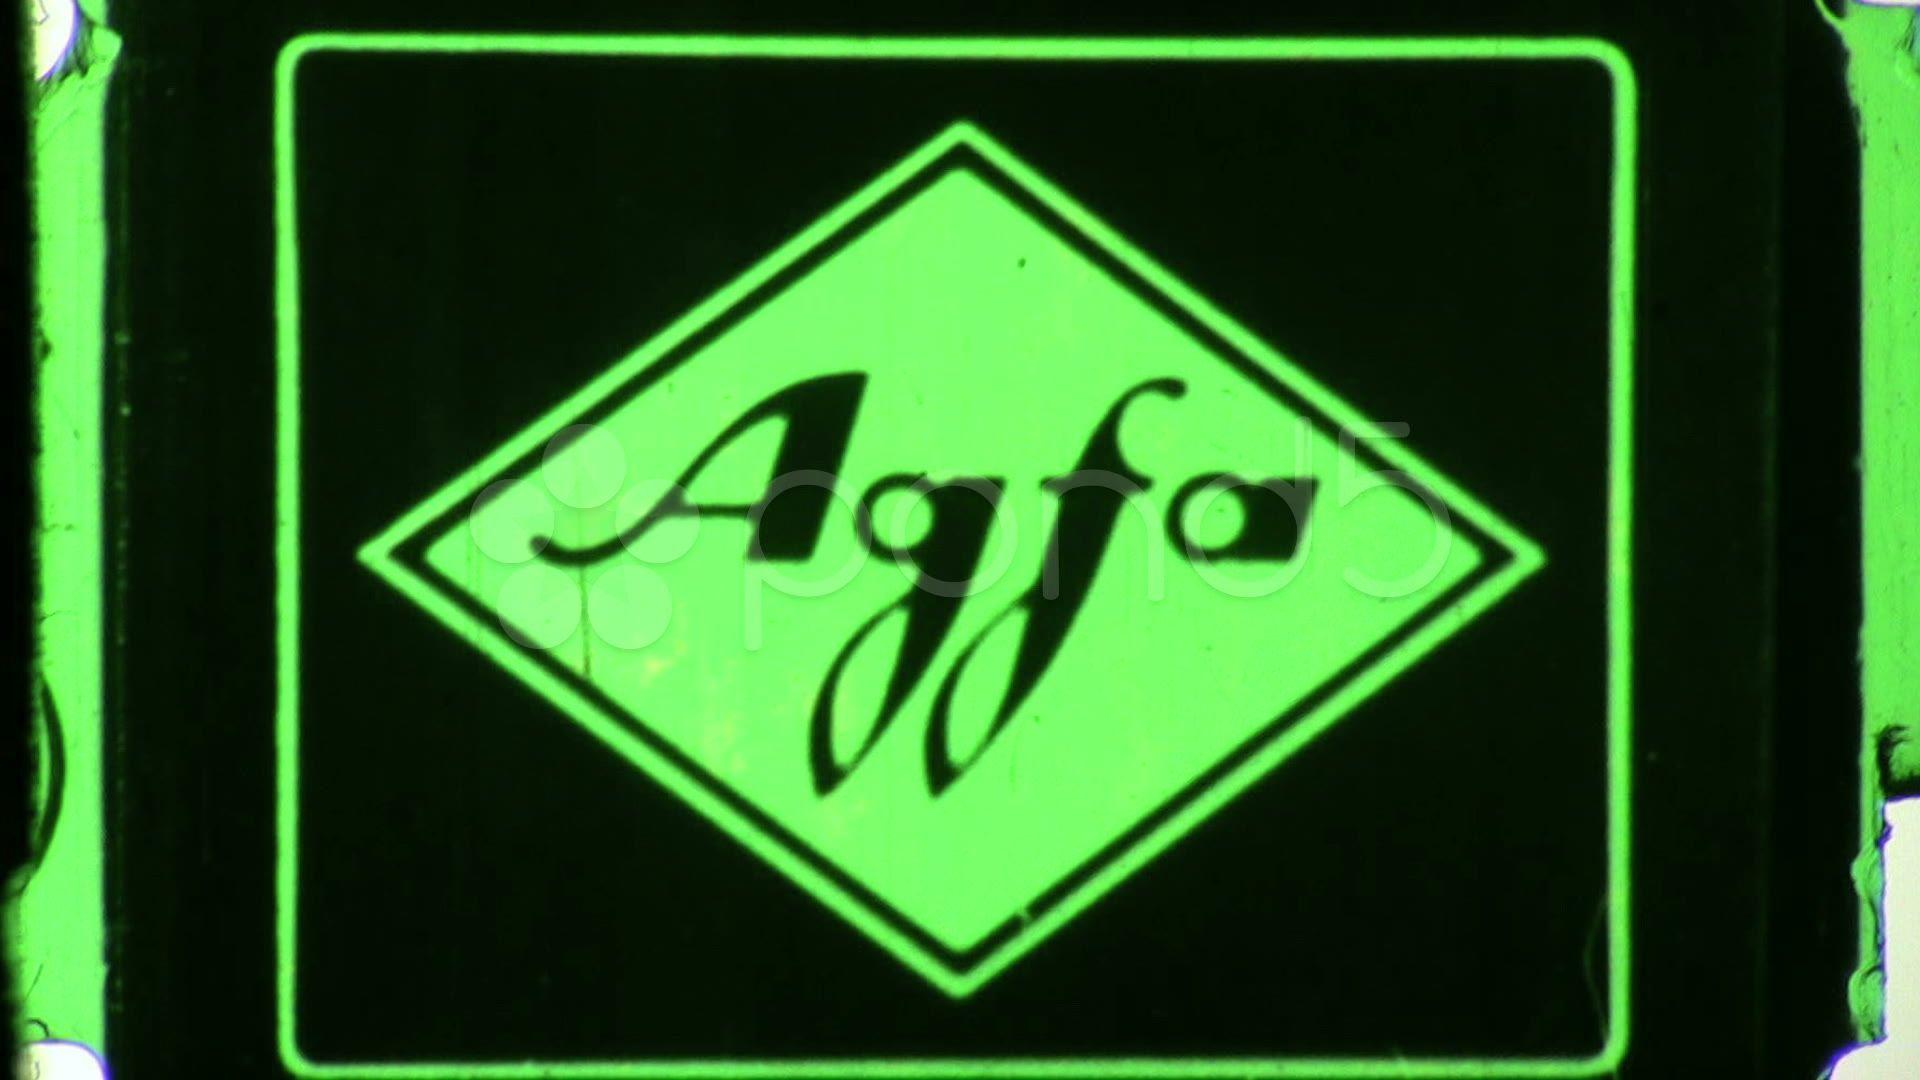 Agfa Logo - AGFA Corporate Film Processing LOGO Vintage Film Home Movie Leader ...